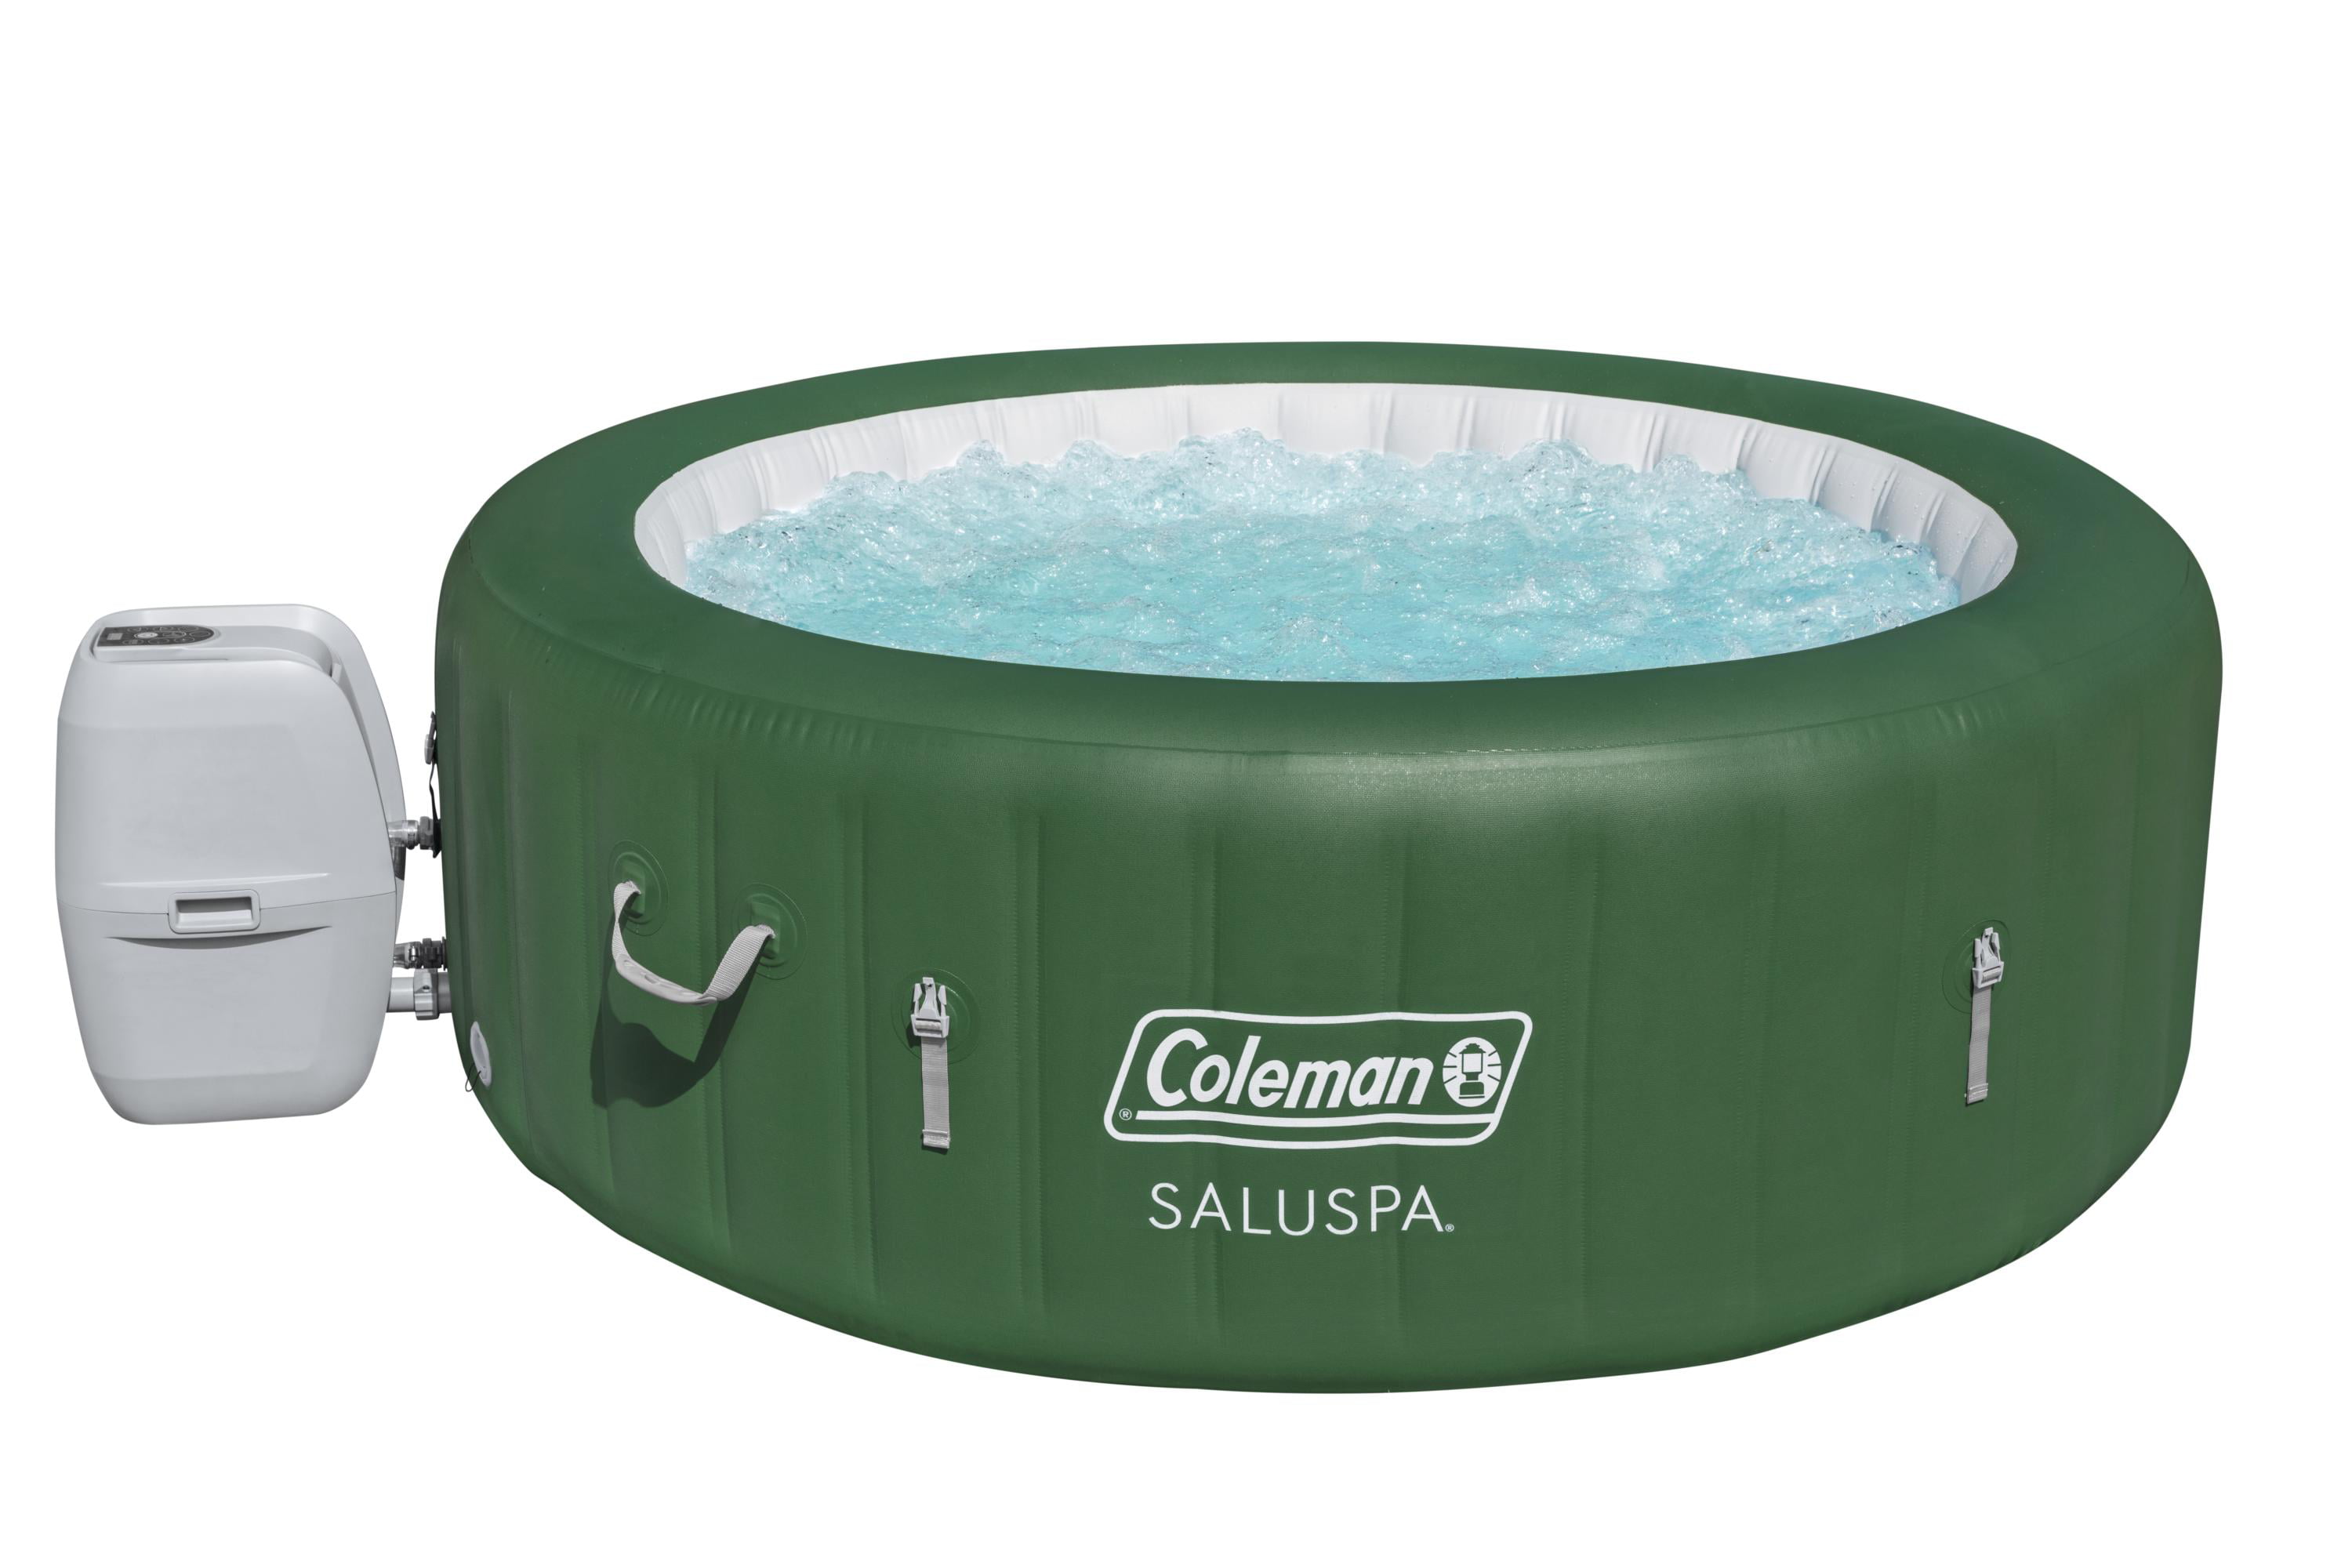 Inflatable Hot Tub Coleman Saluspa